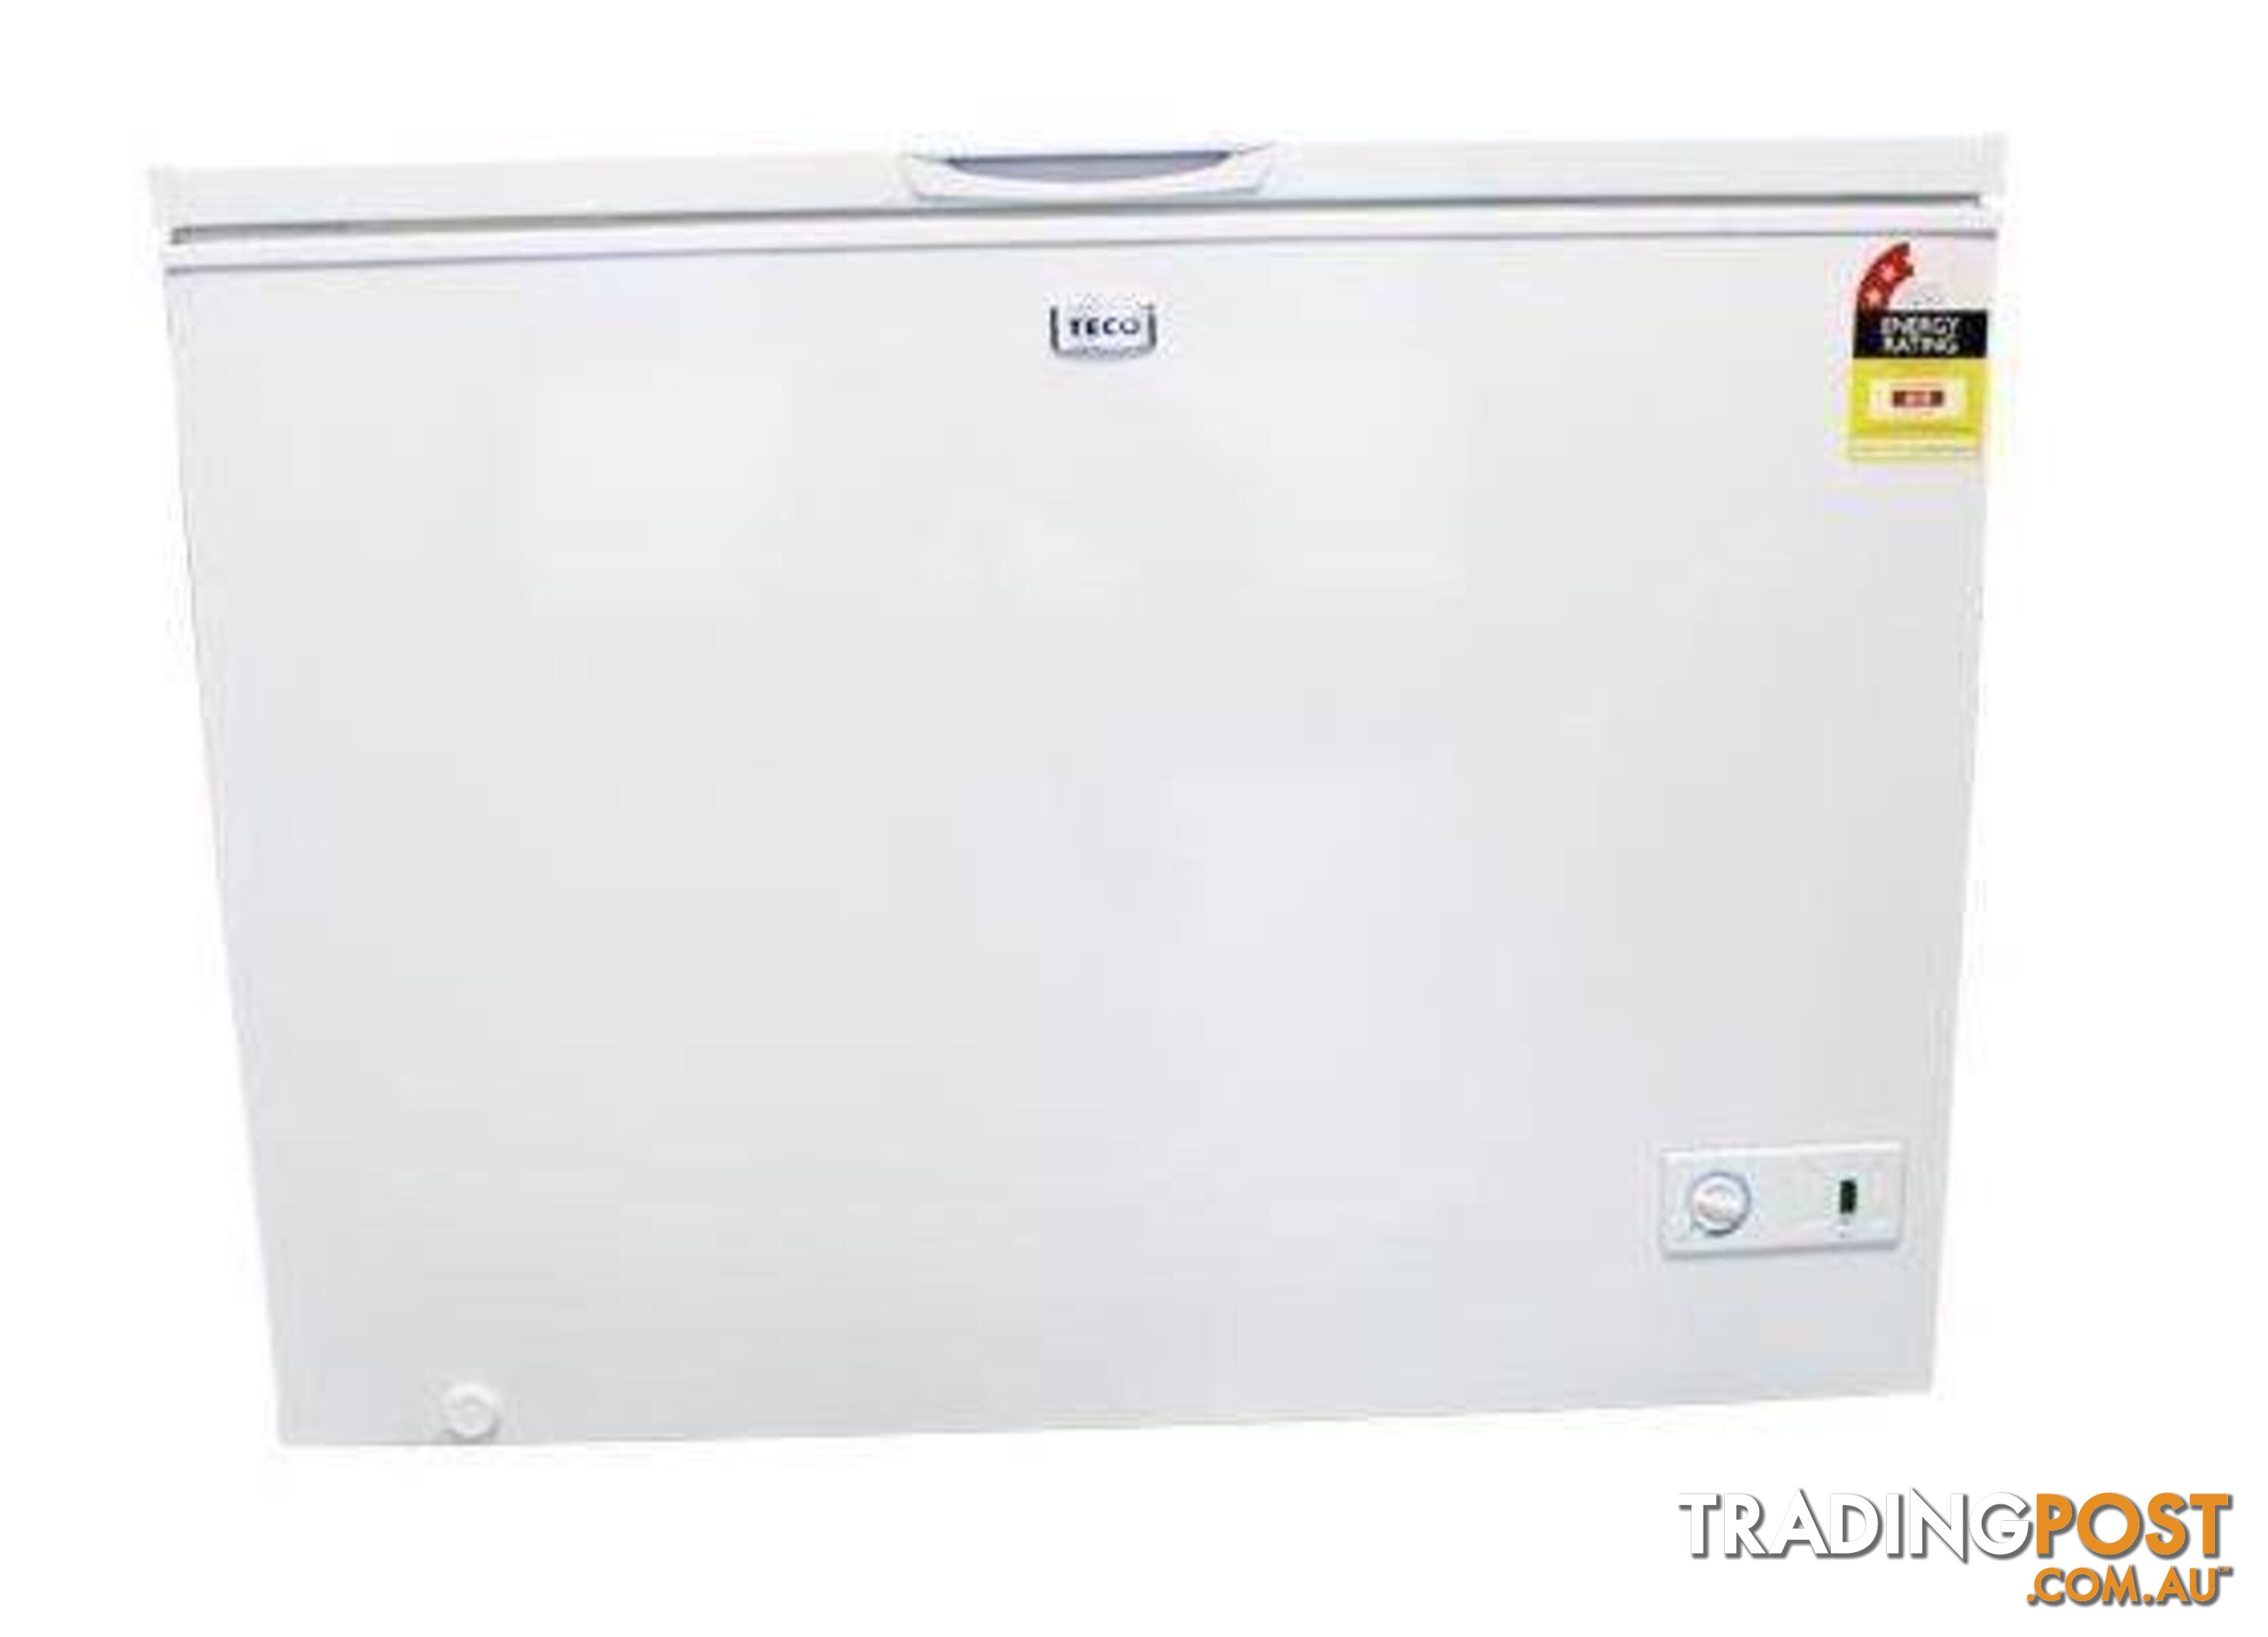 Teco 300 Litre Chest Freezer - Model: TCF300WMD